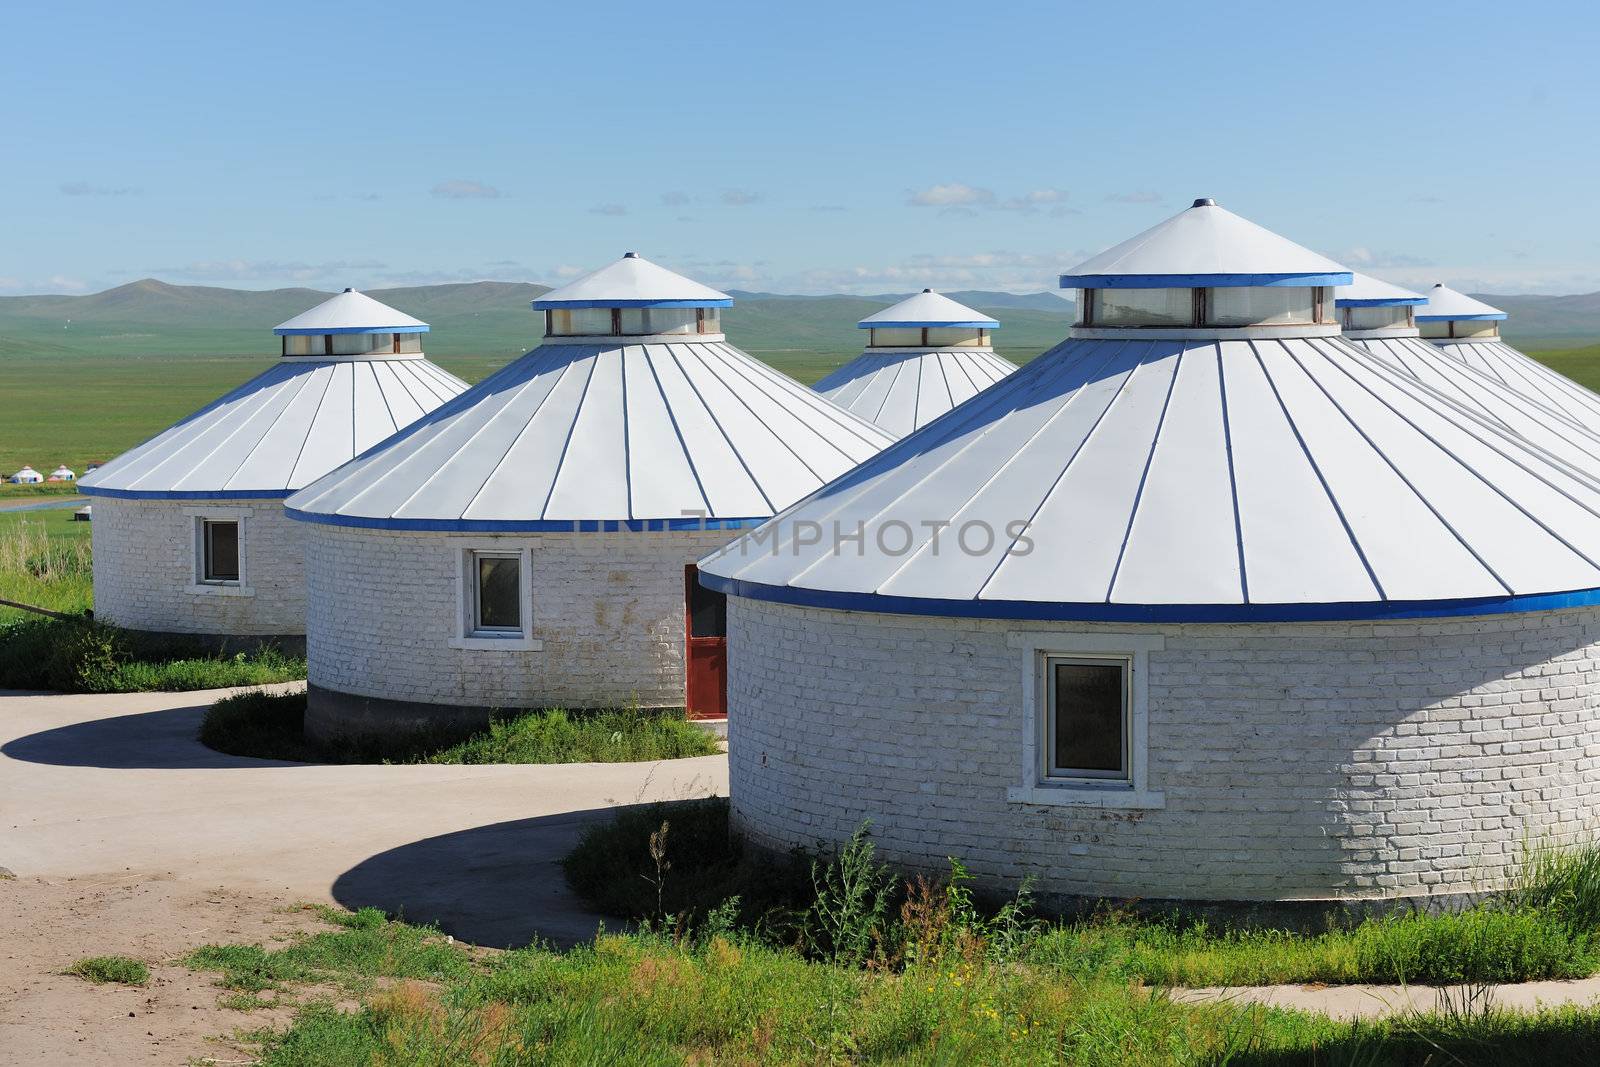 Yurt in Mongolia Grassland by raywoo